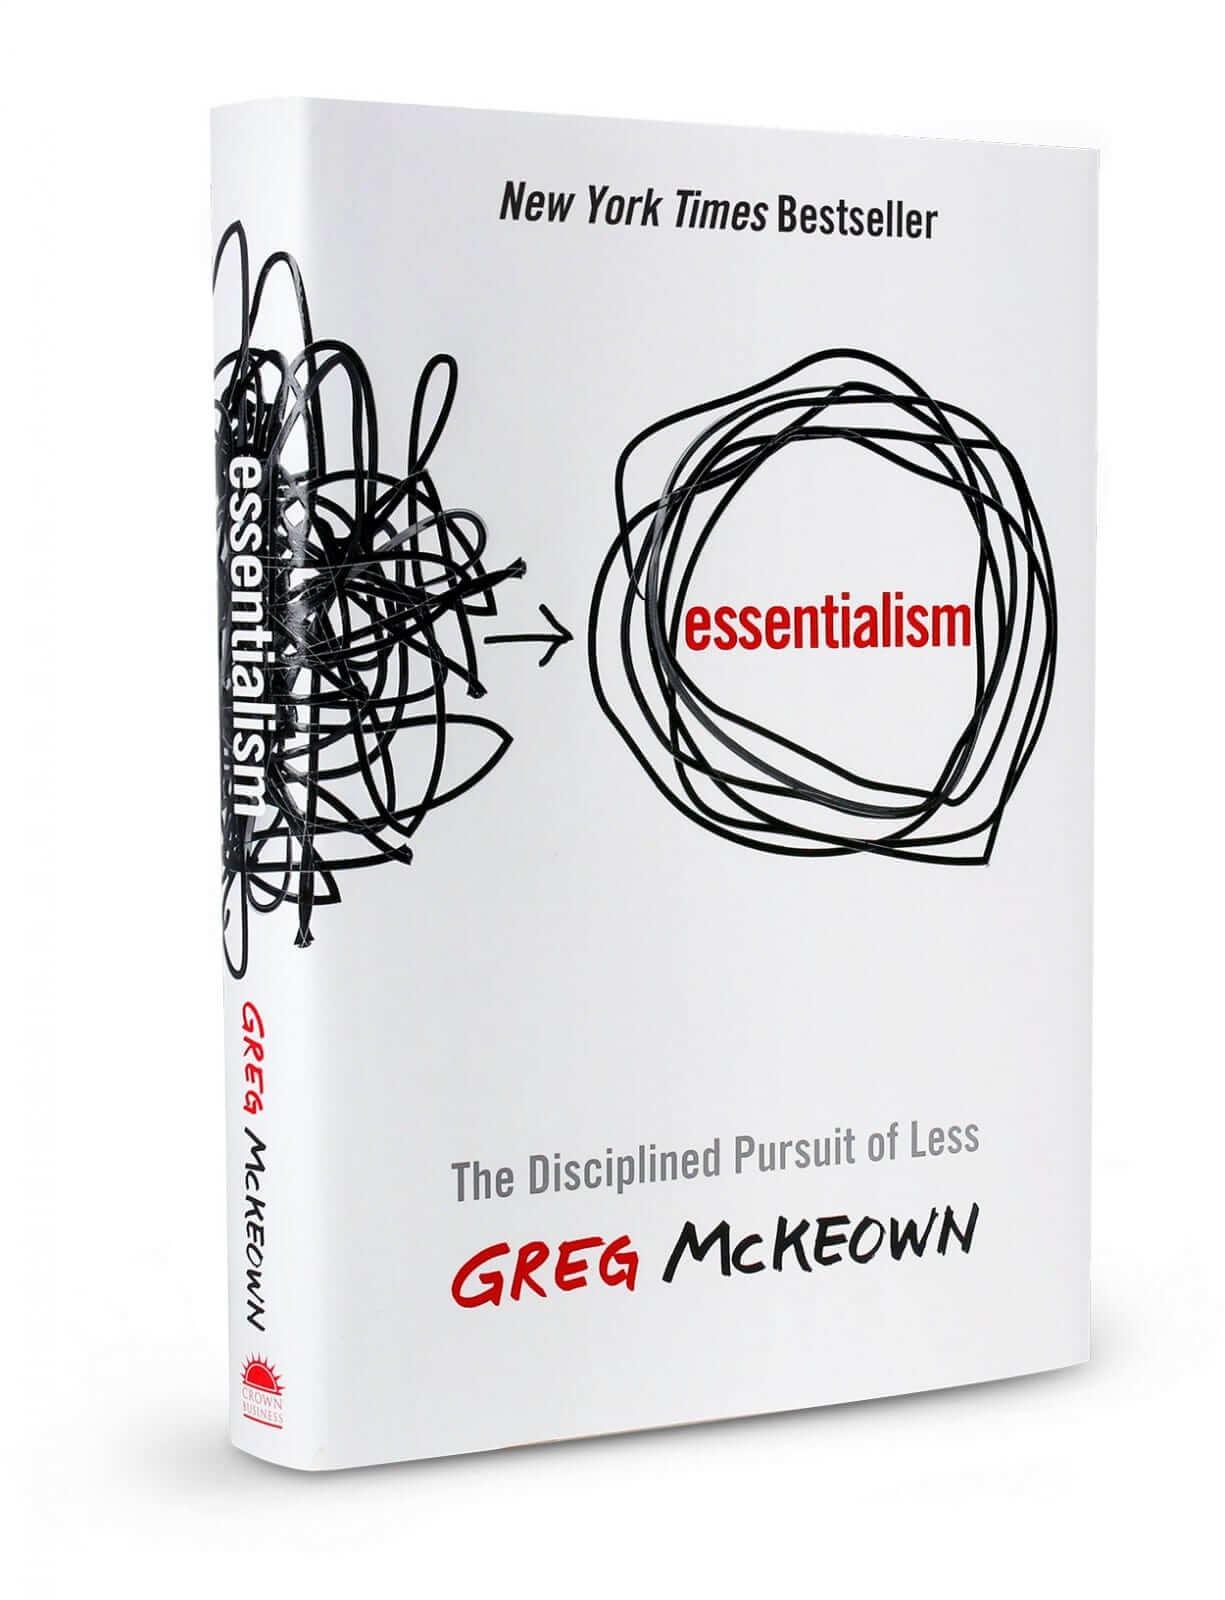 book cover of Greg McKeown's "Essentialism"